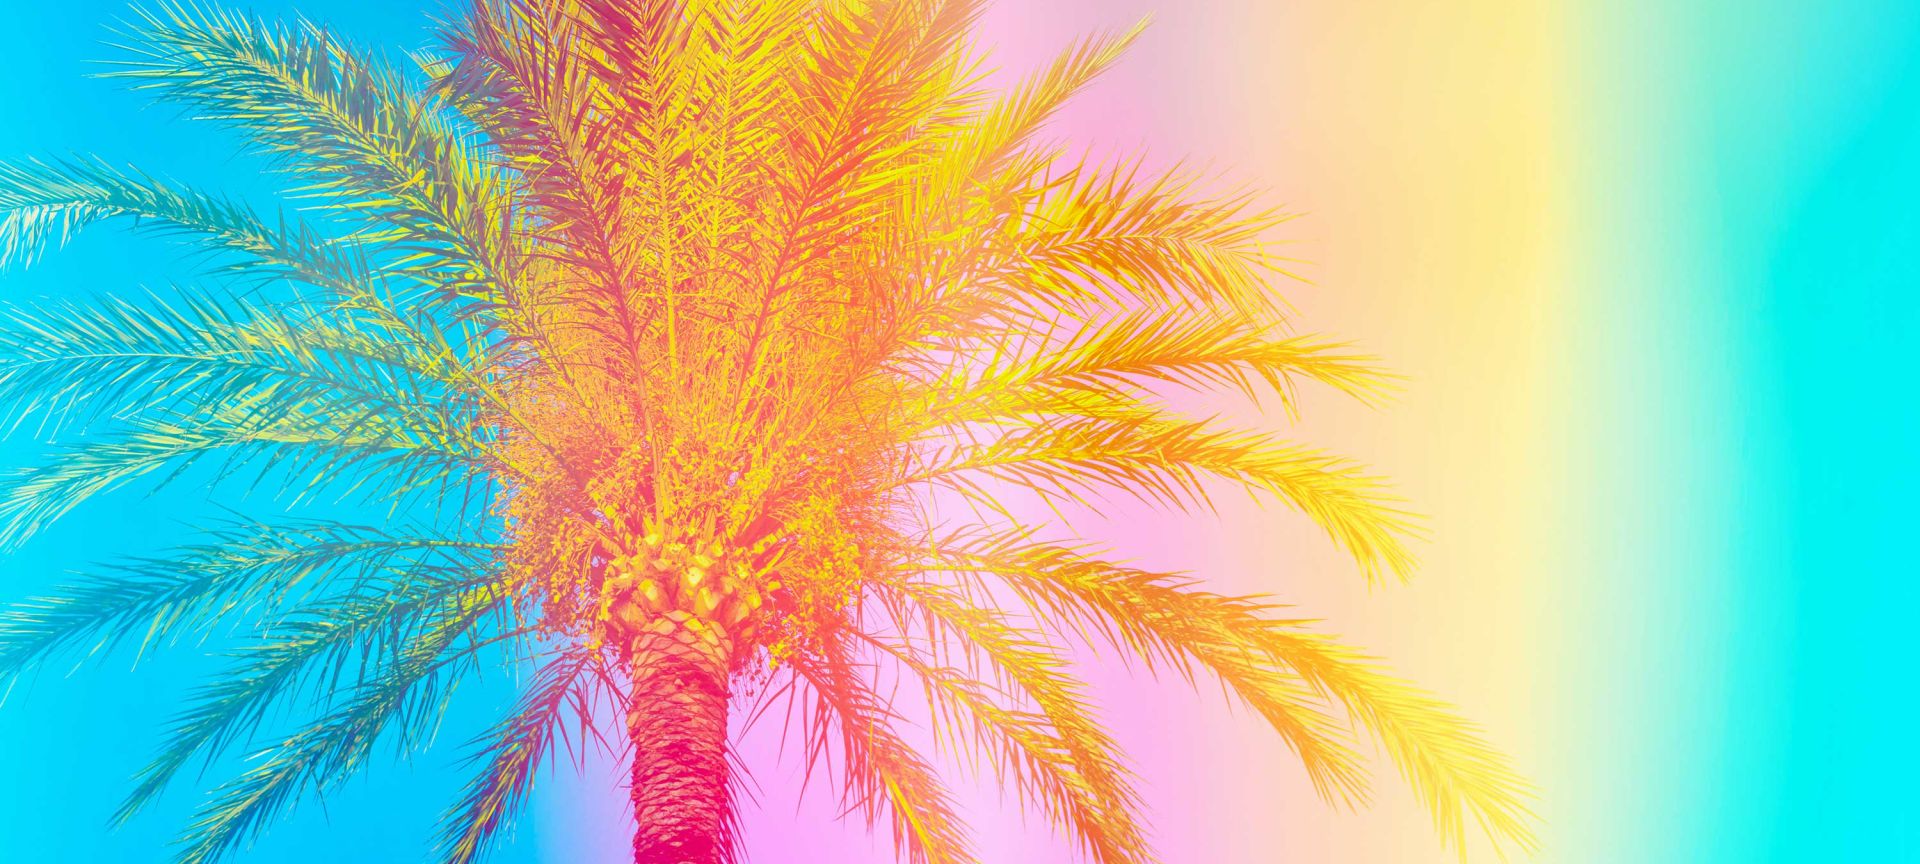 Palm Tree with Rainbow